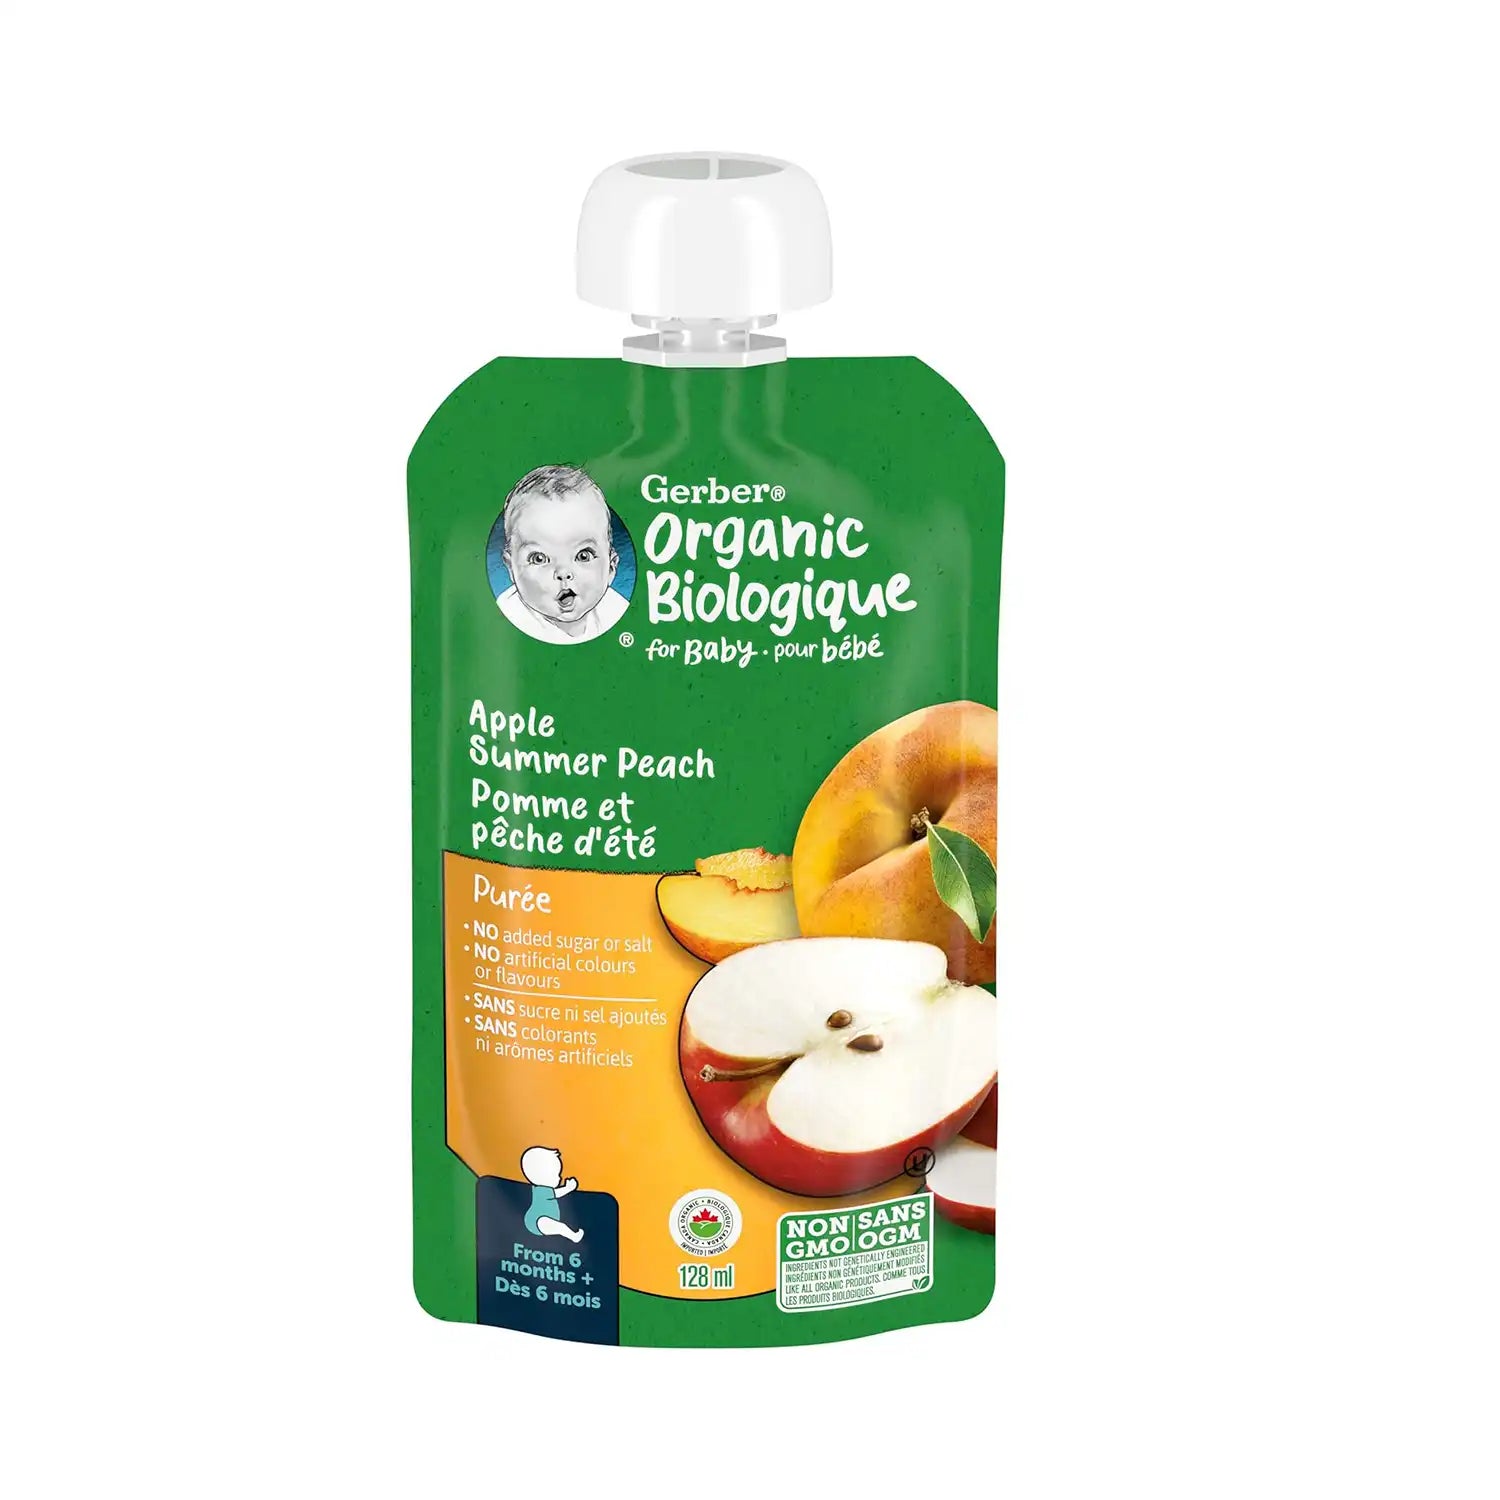 Buy Gerber Organic Biologique Puree for Babies, Apple & Summer Peach Online in India at uyyaala.com